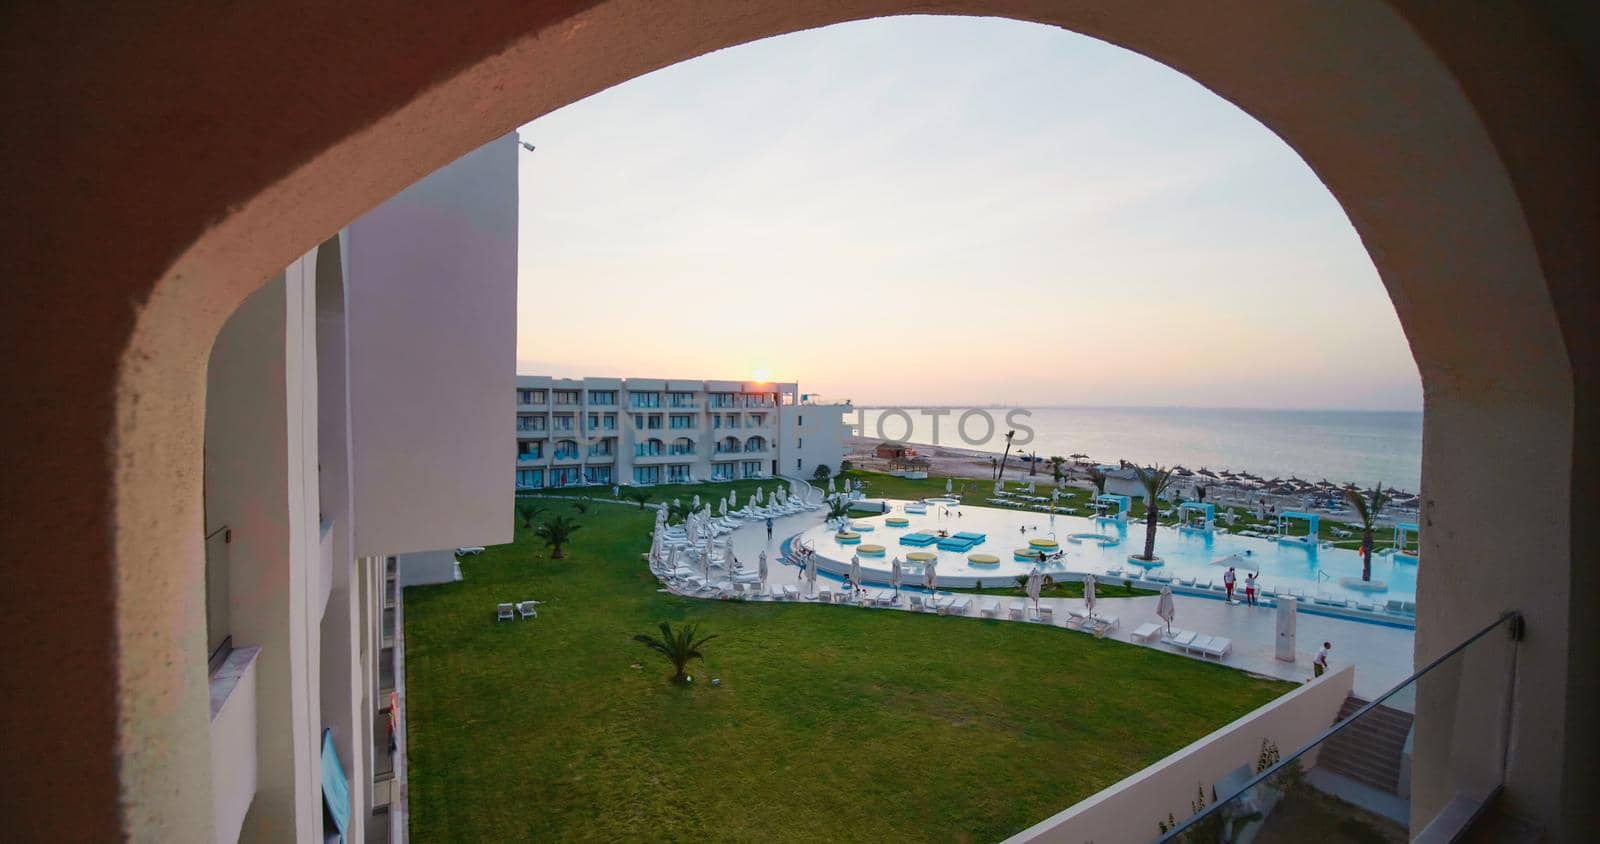 Luxury hotel on the coast of Tunisia. by RecCameraStock